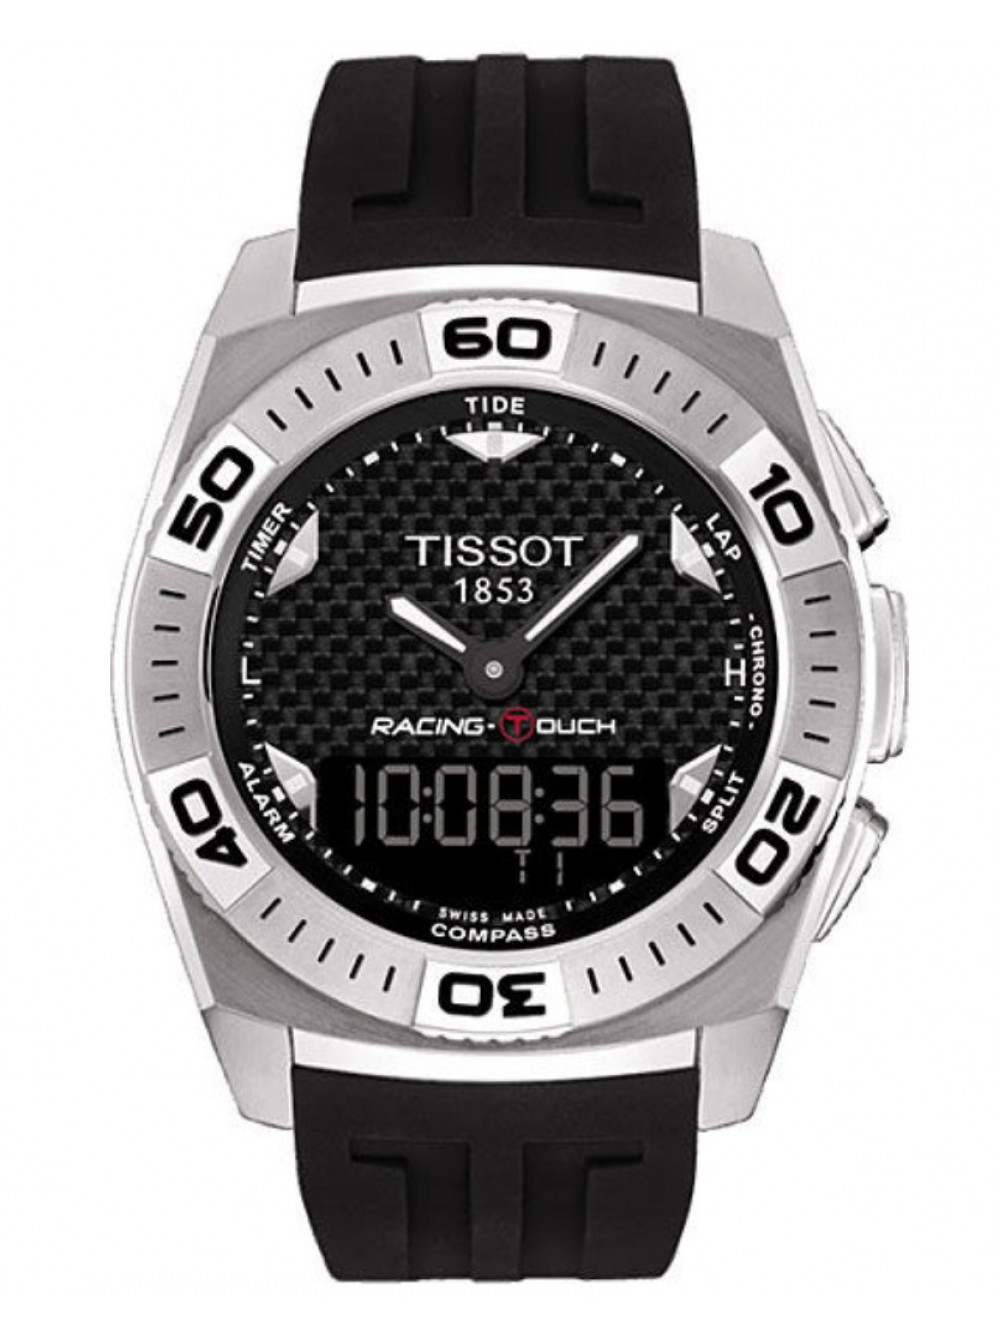 Часы tissot t racing. Tissot Racing-Touch t 002.520.17.051. Tissot t-Race Touch t081.420.17.017.01. Наручные часы Tissot t002.520.17.201.01. Часы Tissot Racing Touch.